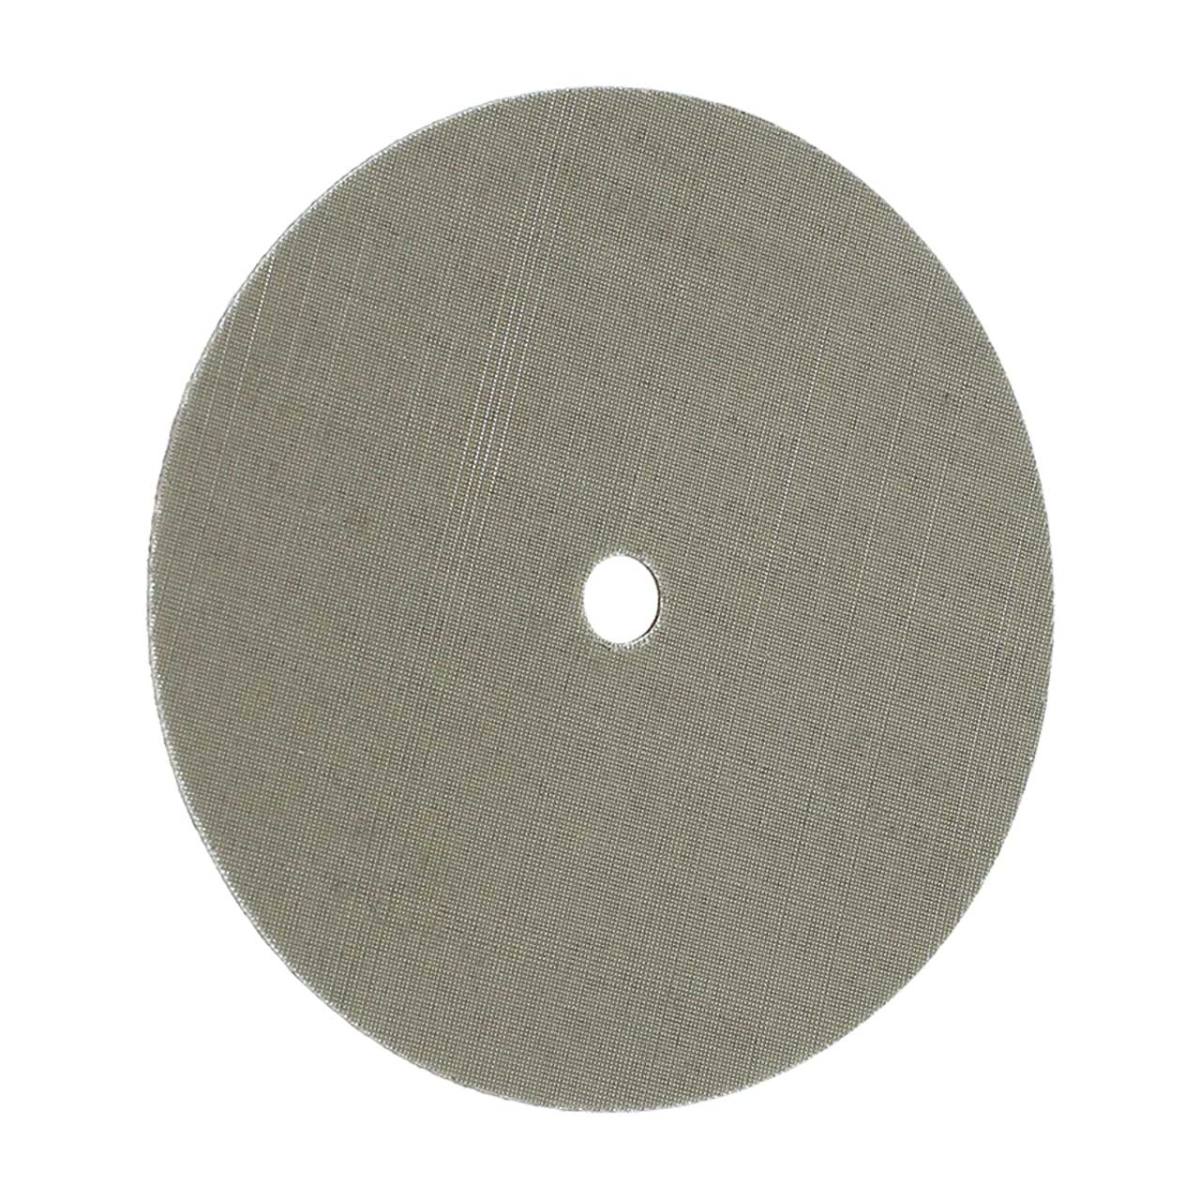 FIX KLETT Trizact disk, 150 mm x 10 mm, grain 220 / A 100, Velcro